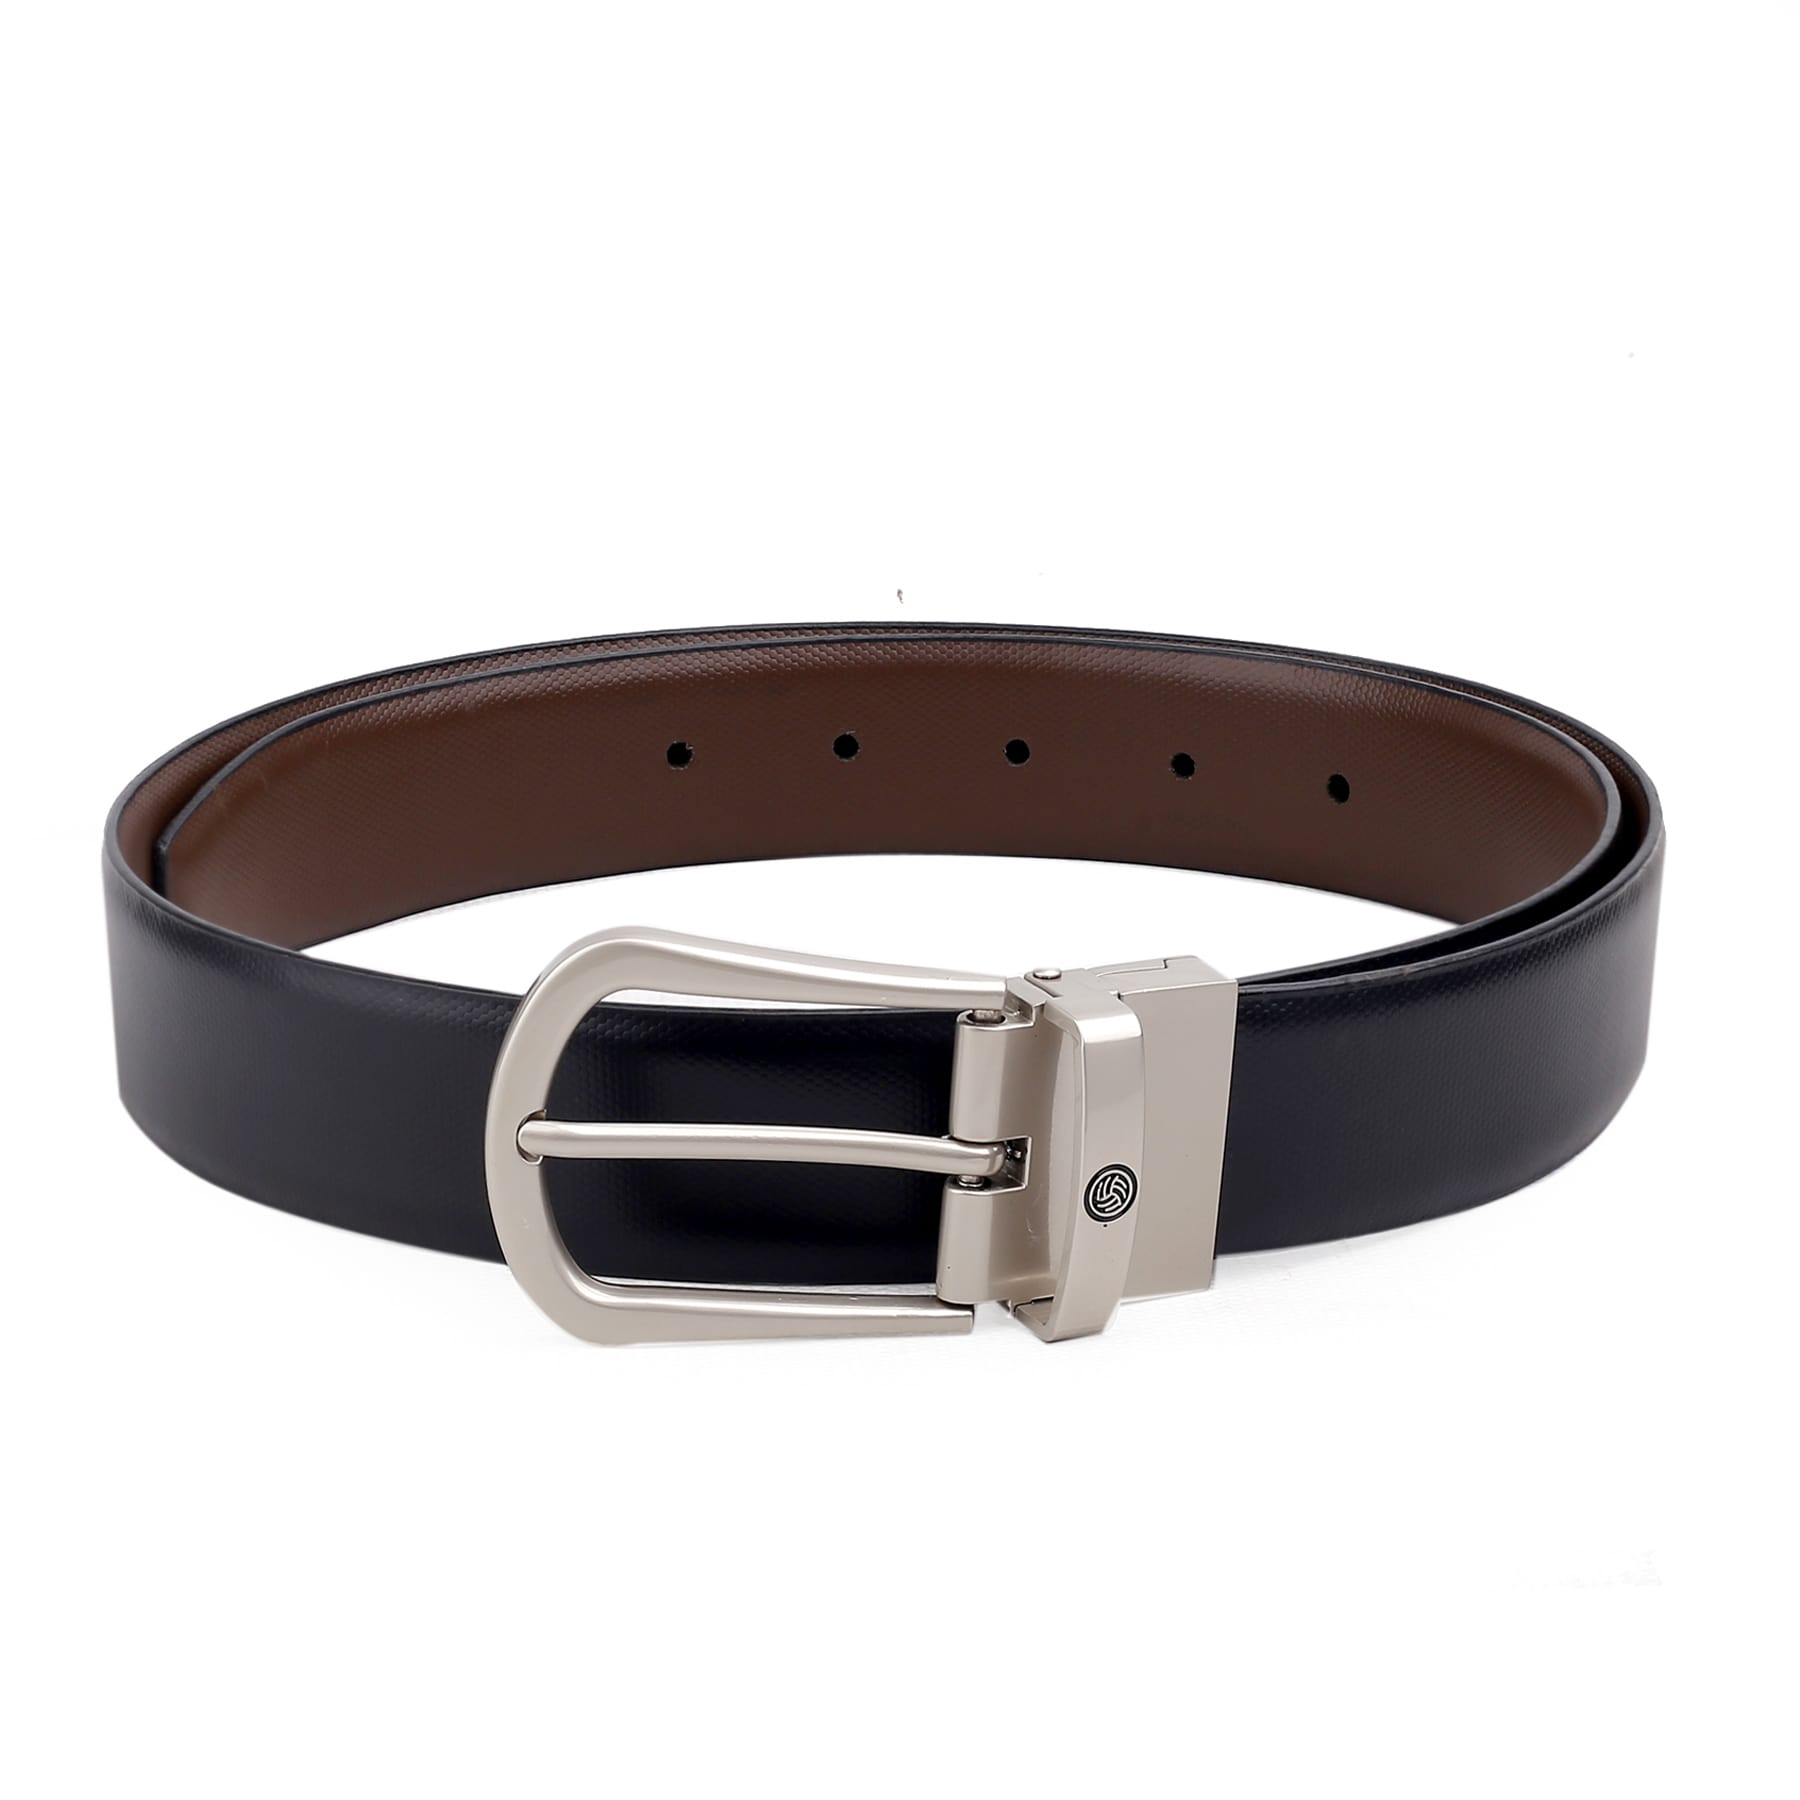 Leather Belt w/ Buckle - Men's Ratchet Belt - Black, 1.5